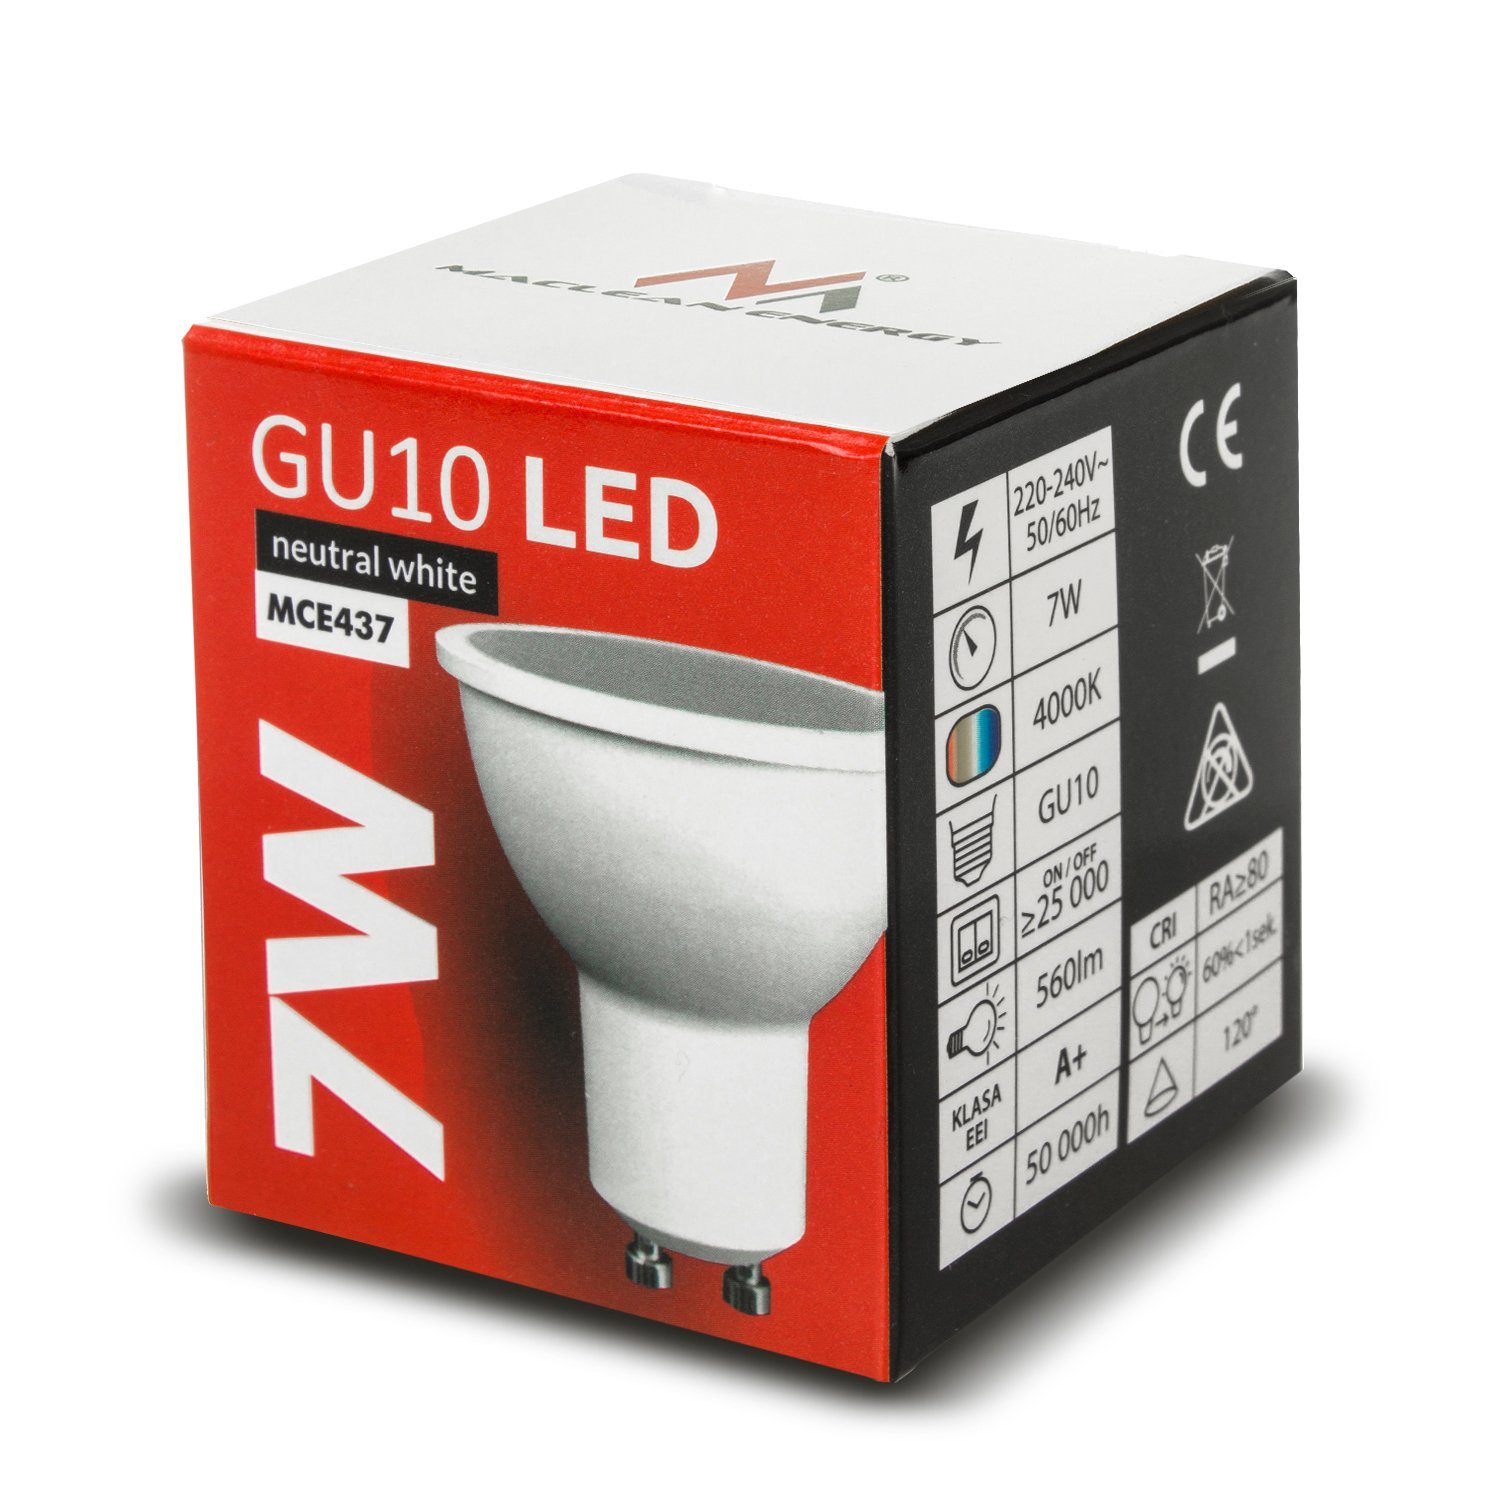 GU10 Maclean NW, - GU10, LED-Leuchtmittel Neutralweiß LED-Leuchtmittel 4000K MCE437 7W